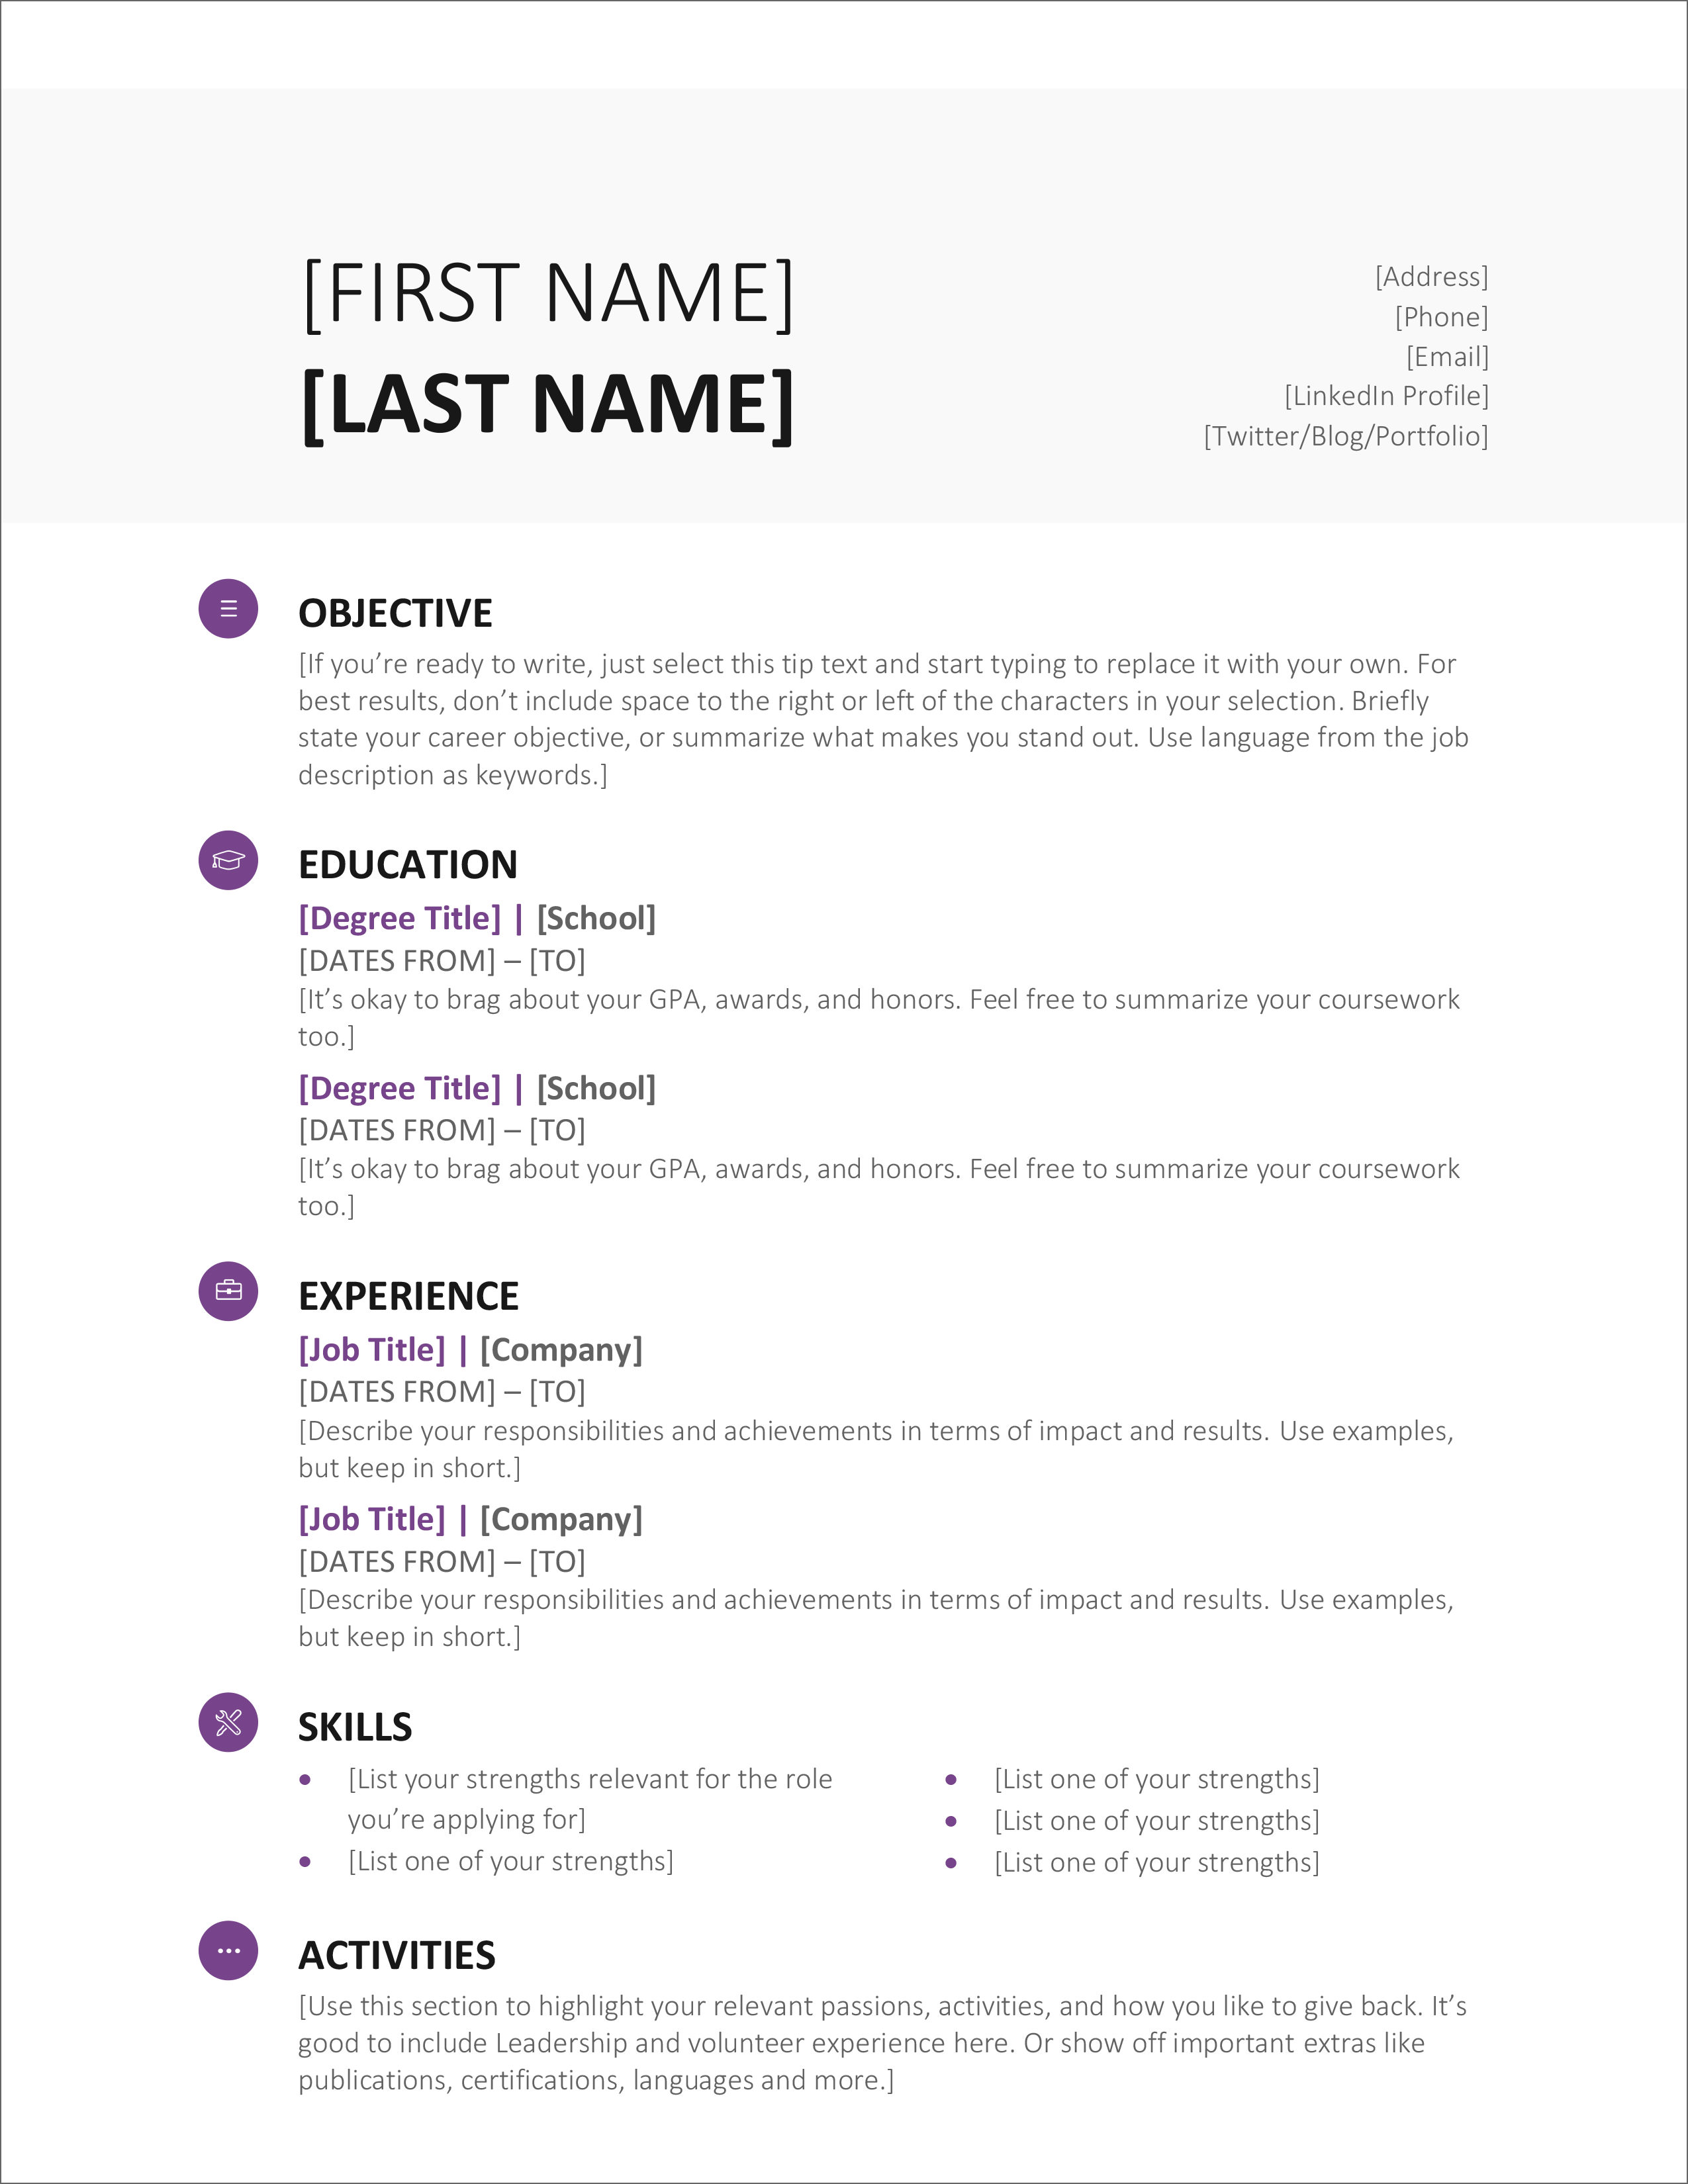 Free resume download templates microsoft word - dasalfa